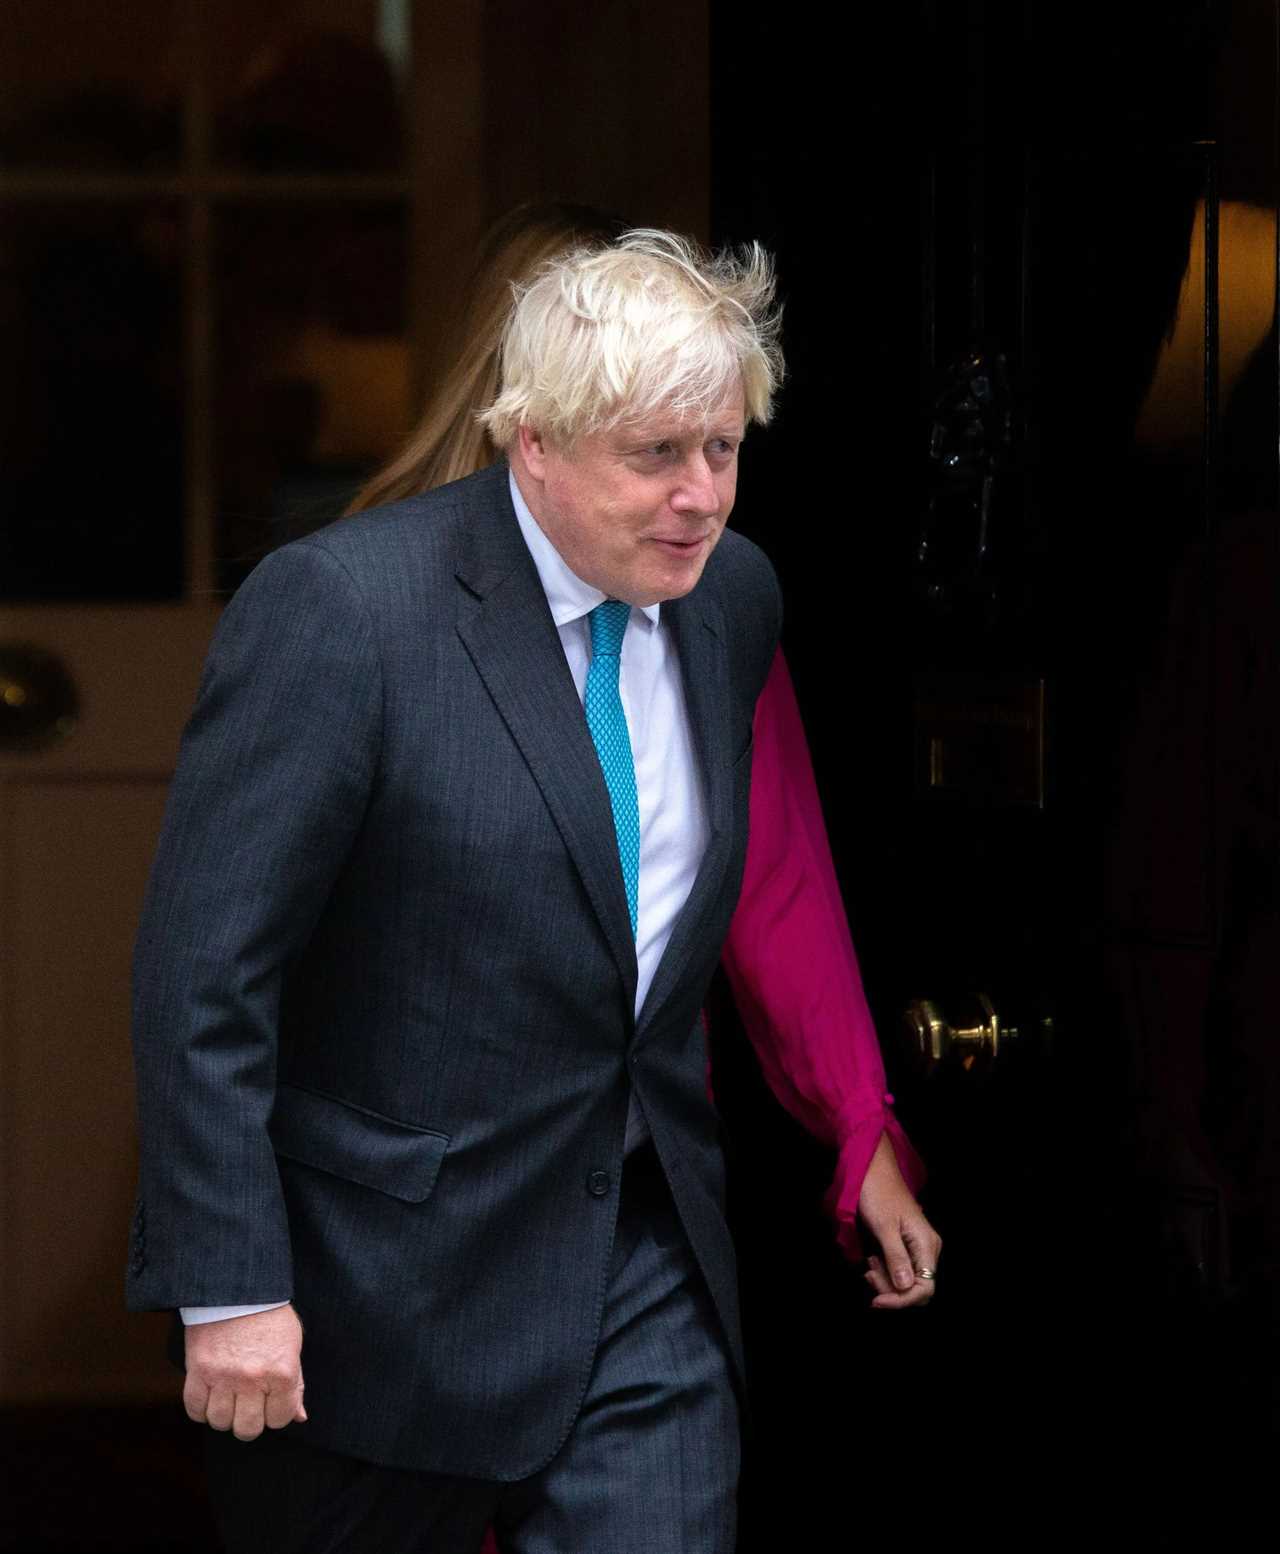 How Boris Johnson dropped five clues hinting of a comeback – including his ‘hasta la vista, baby’ farewell speech